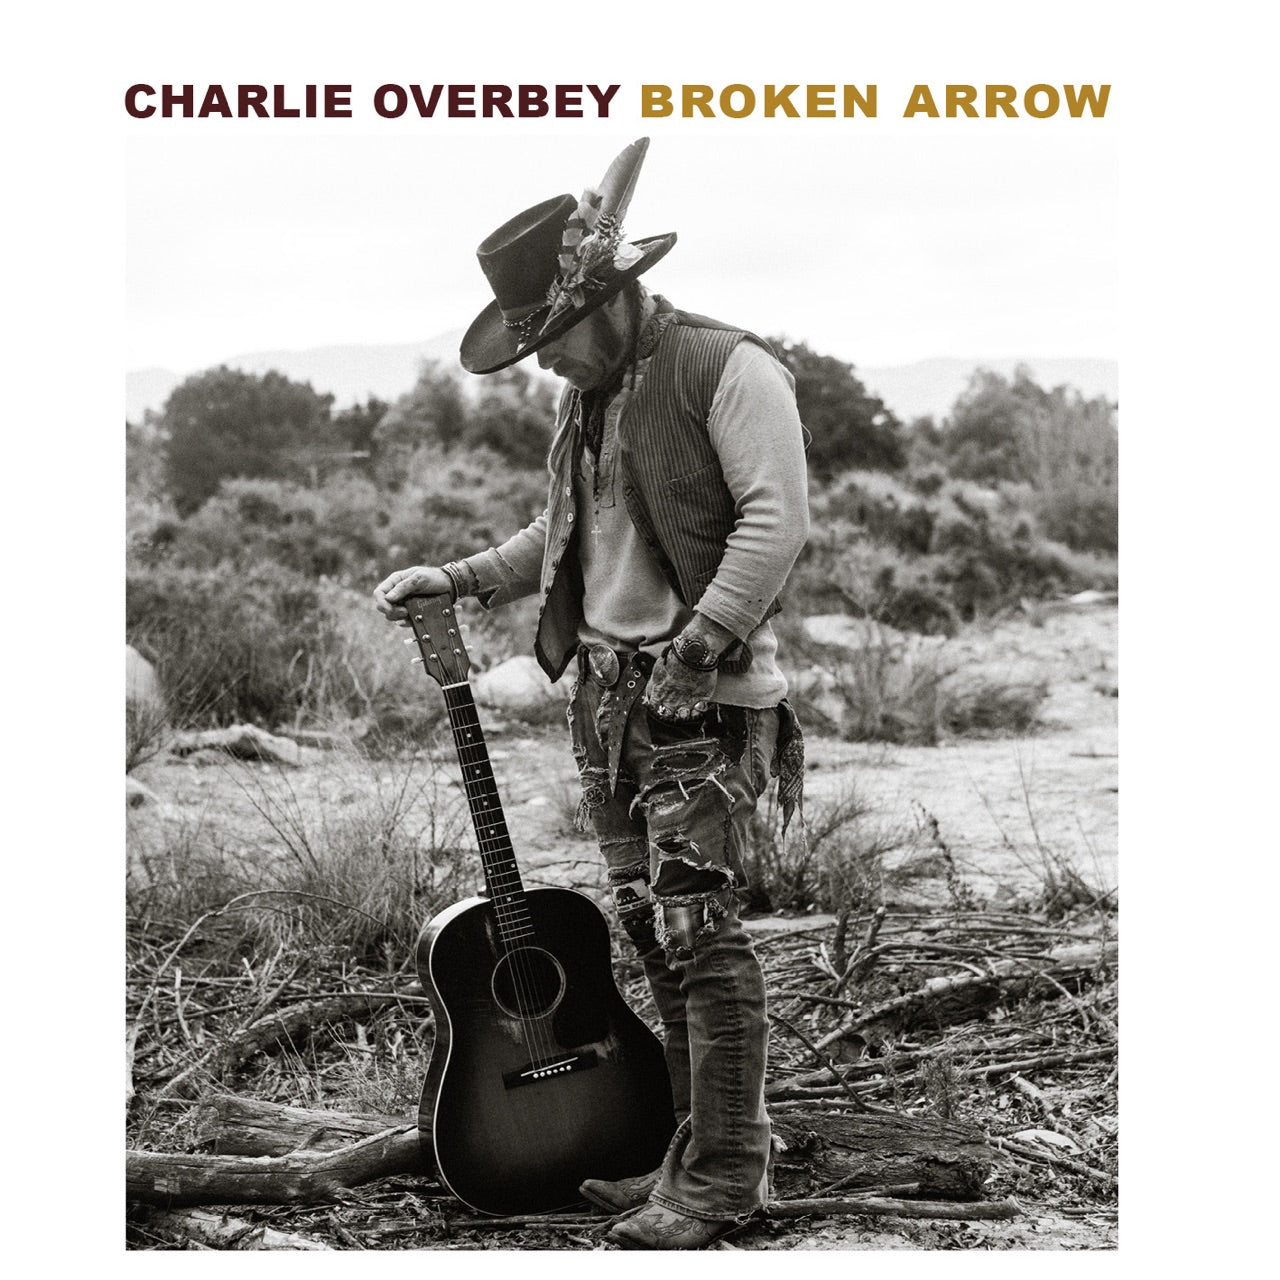 Full Length Charlie Overbey "Broken Arrow" Vinyl LP Limited Edition